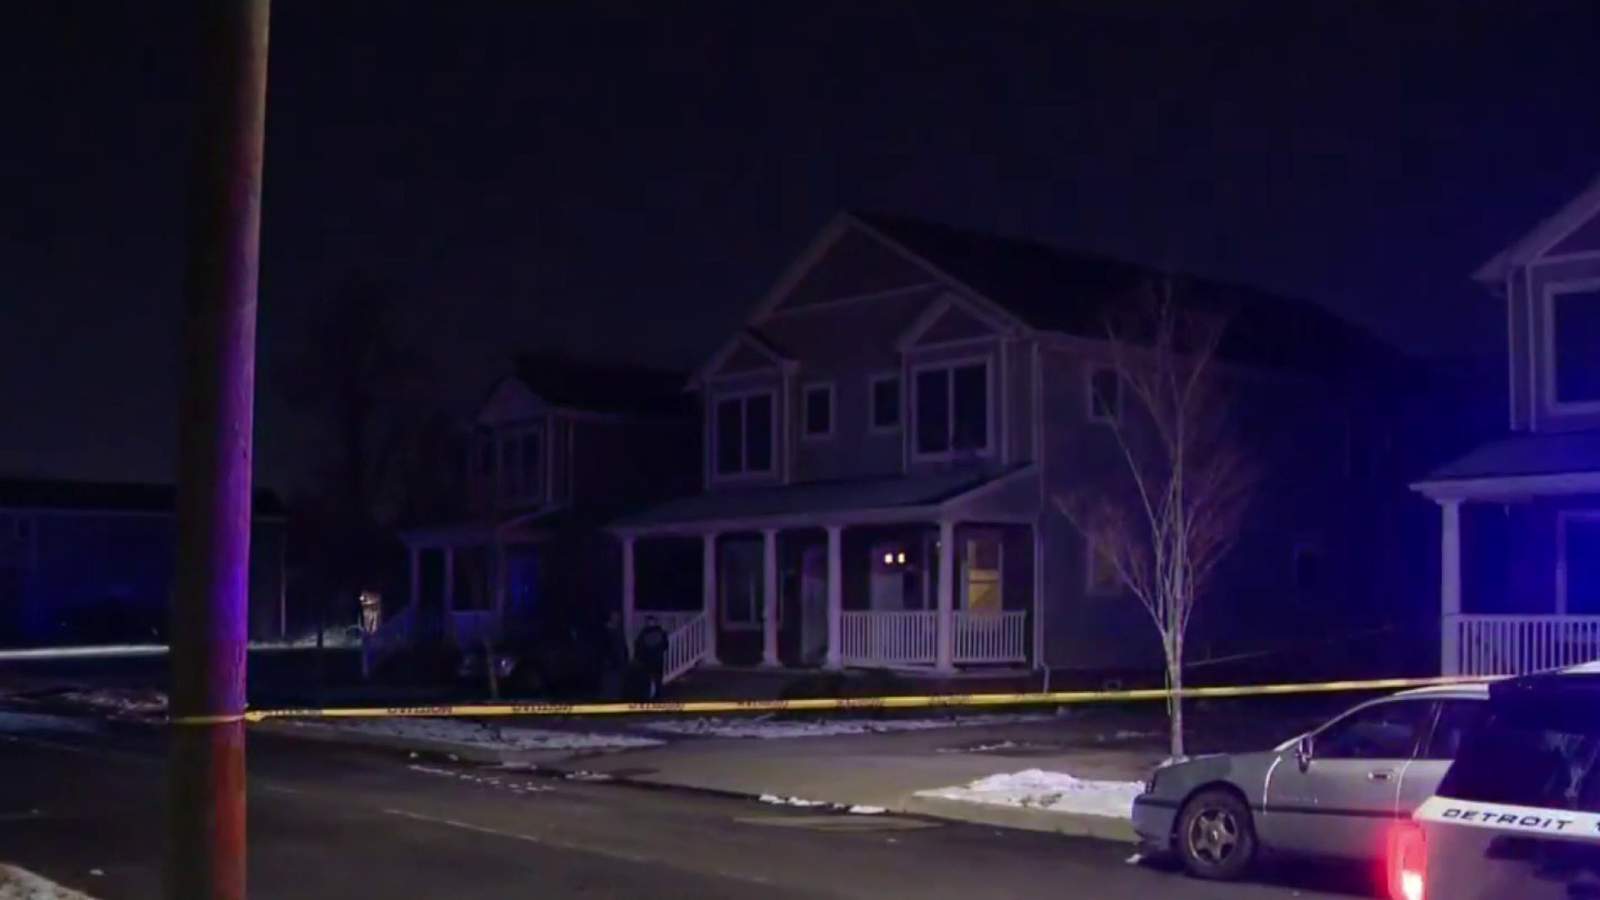 Nightside Report Dec. 19, 2020: Family in shock after 2 sisters fatally shot in Detroit, former Michigan Gov. Granholm nominated as Biden’s energy secretary